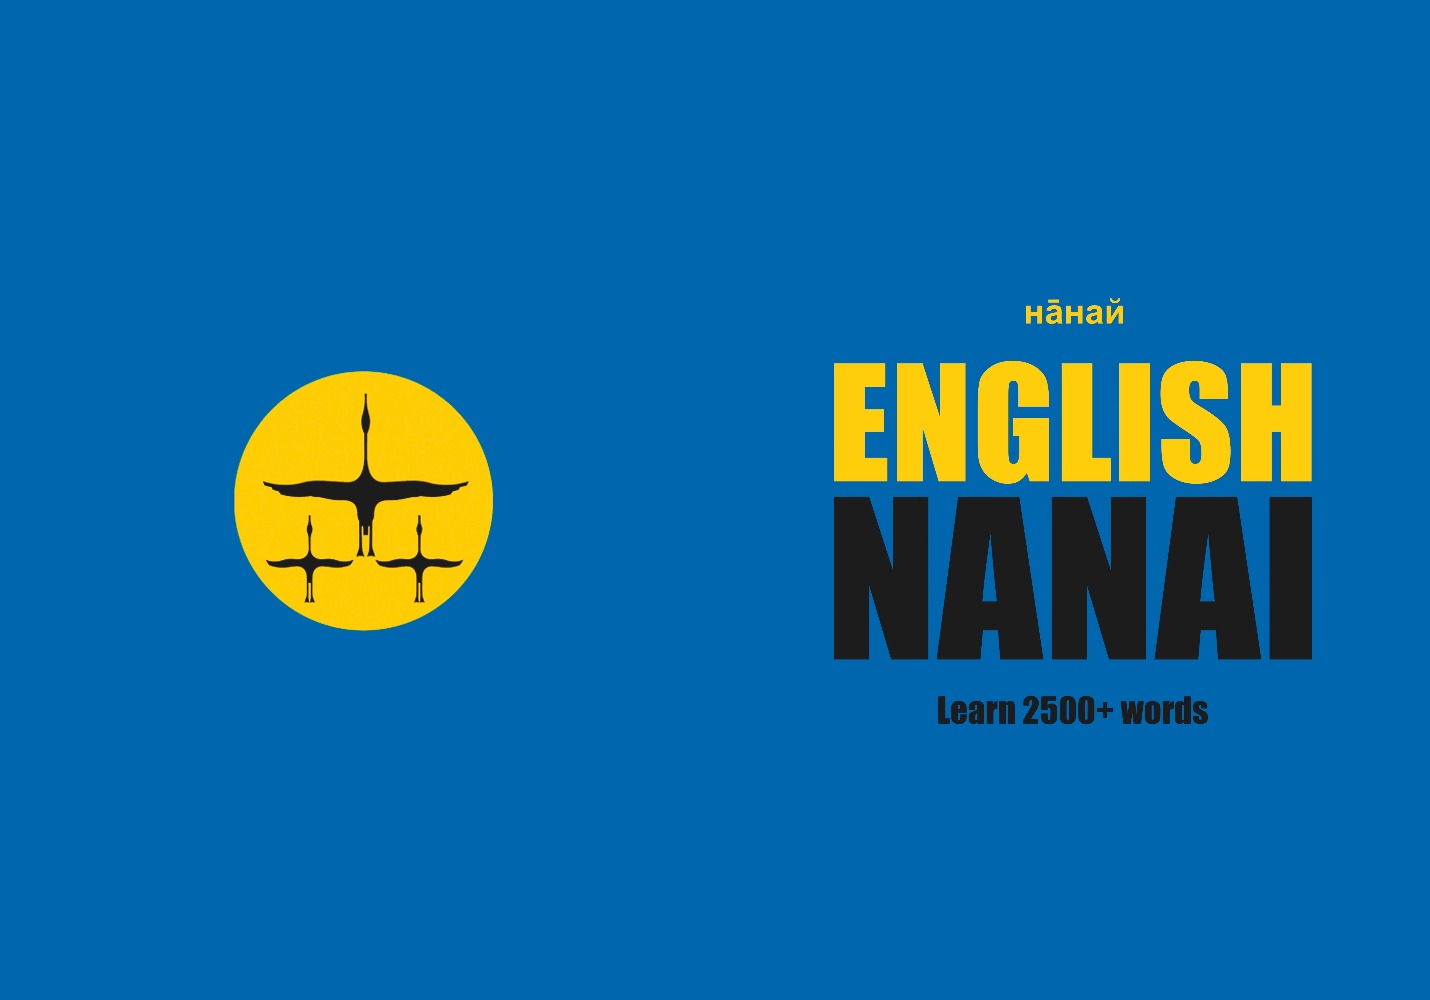 Nanai language learning notebook cover